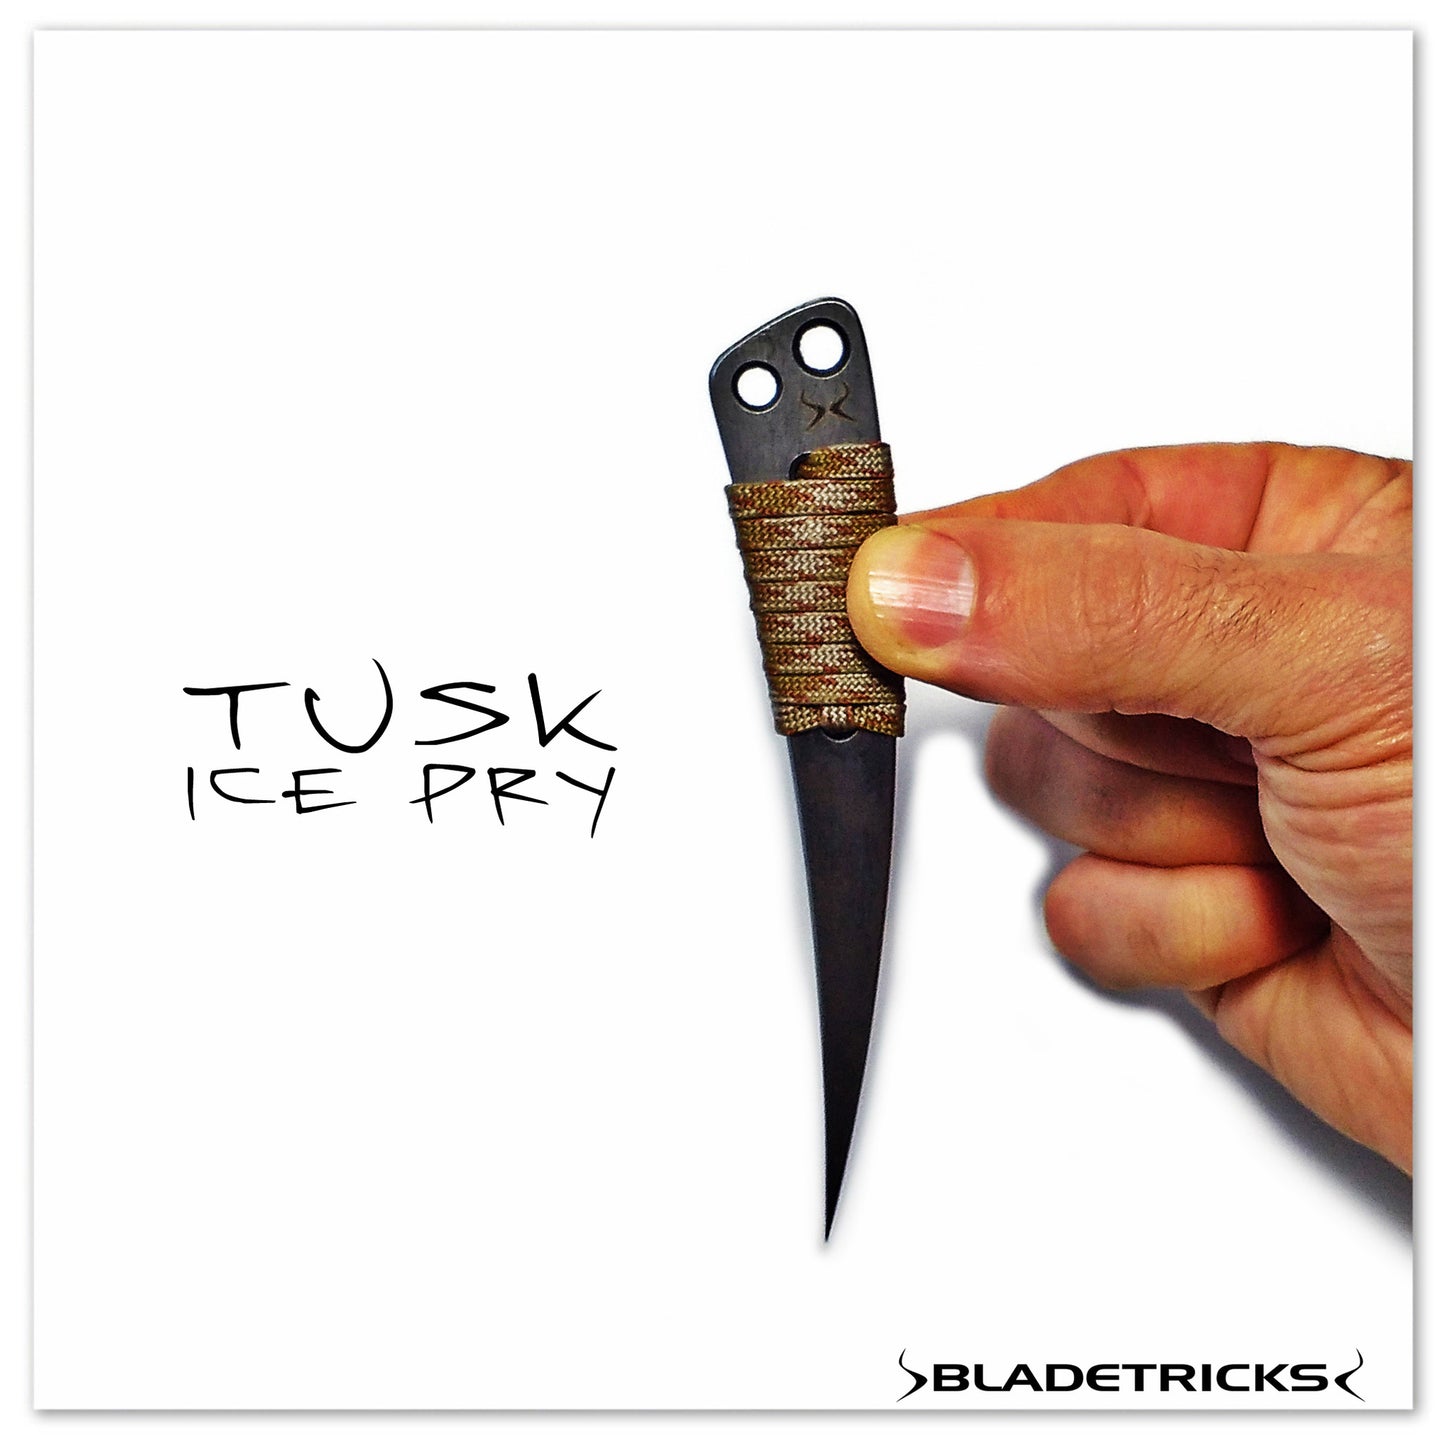 Bladetricks Tusk self defense edc pocket tool